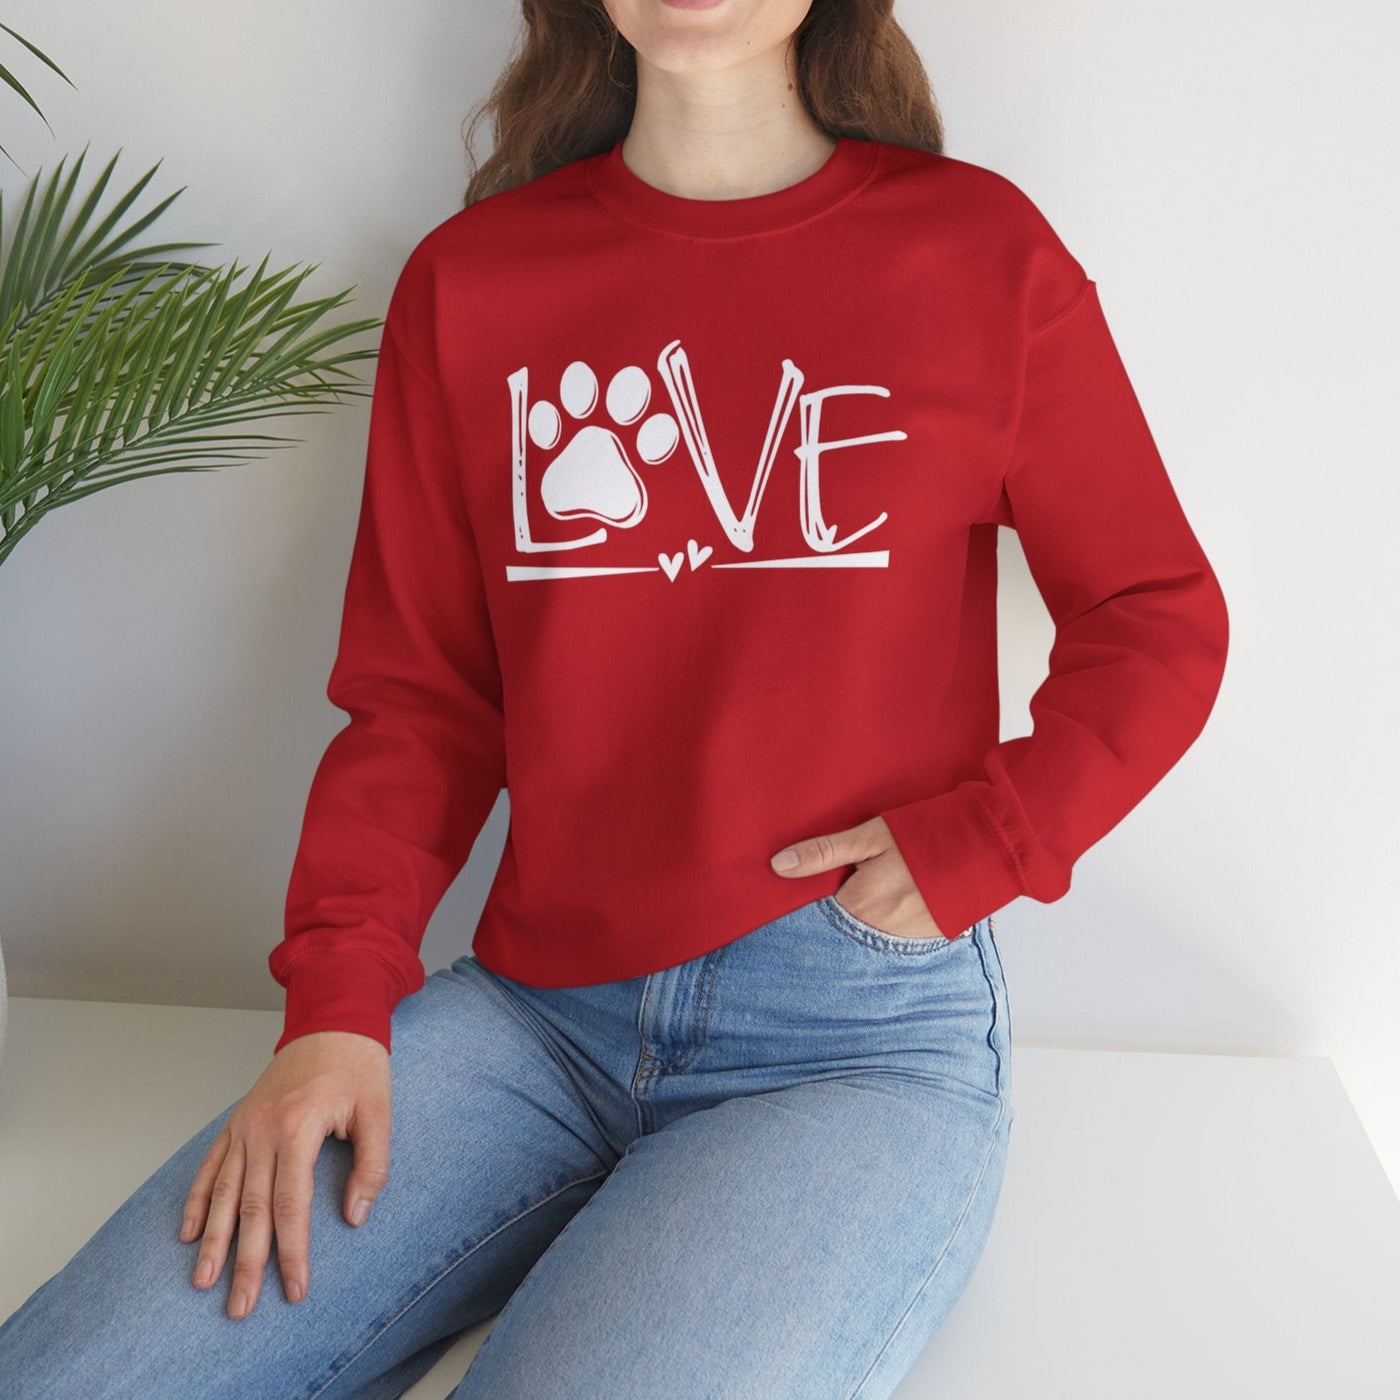 Dog Love Sweatshirt